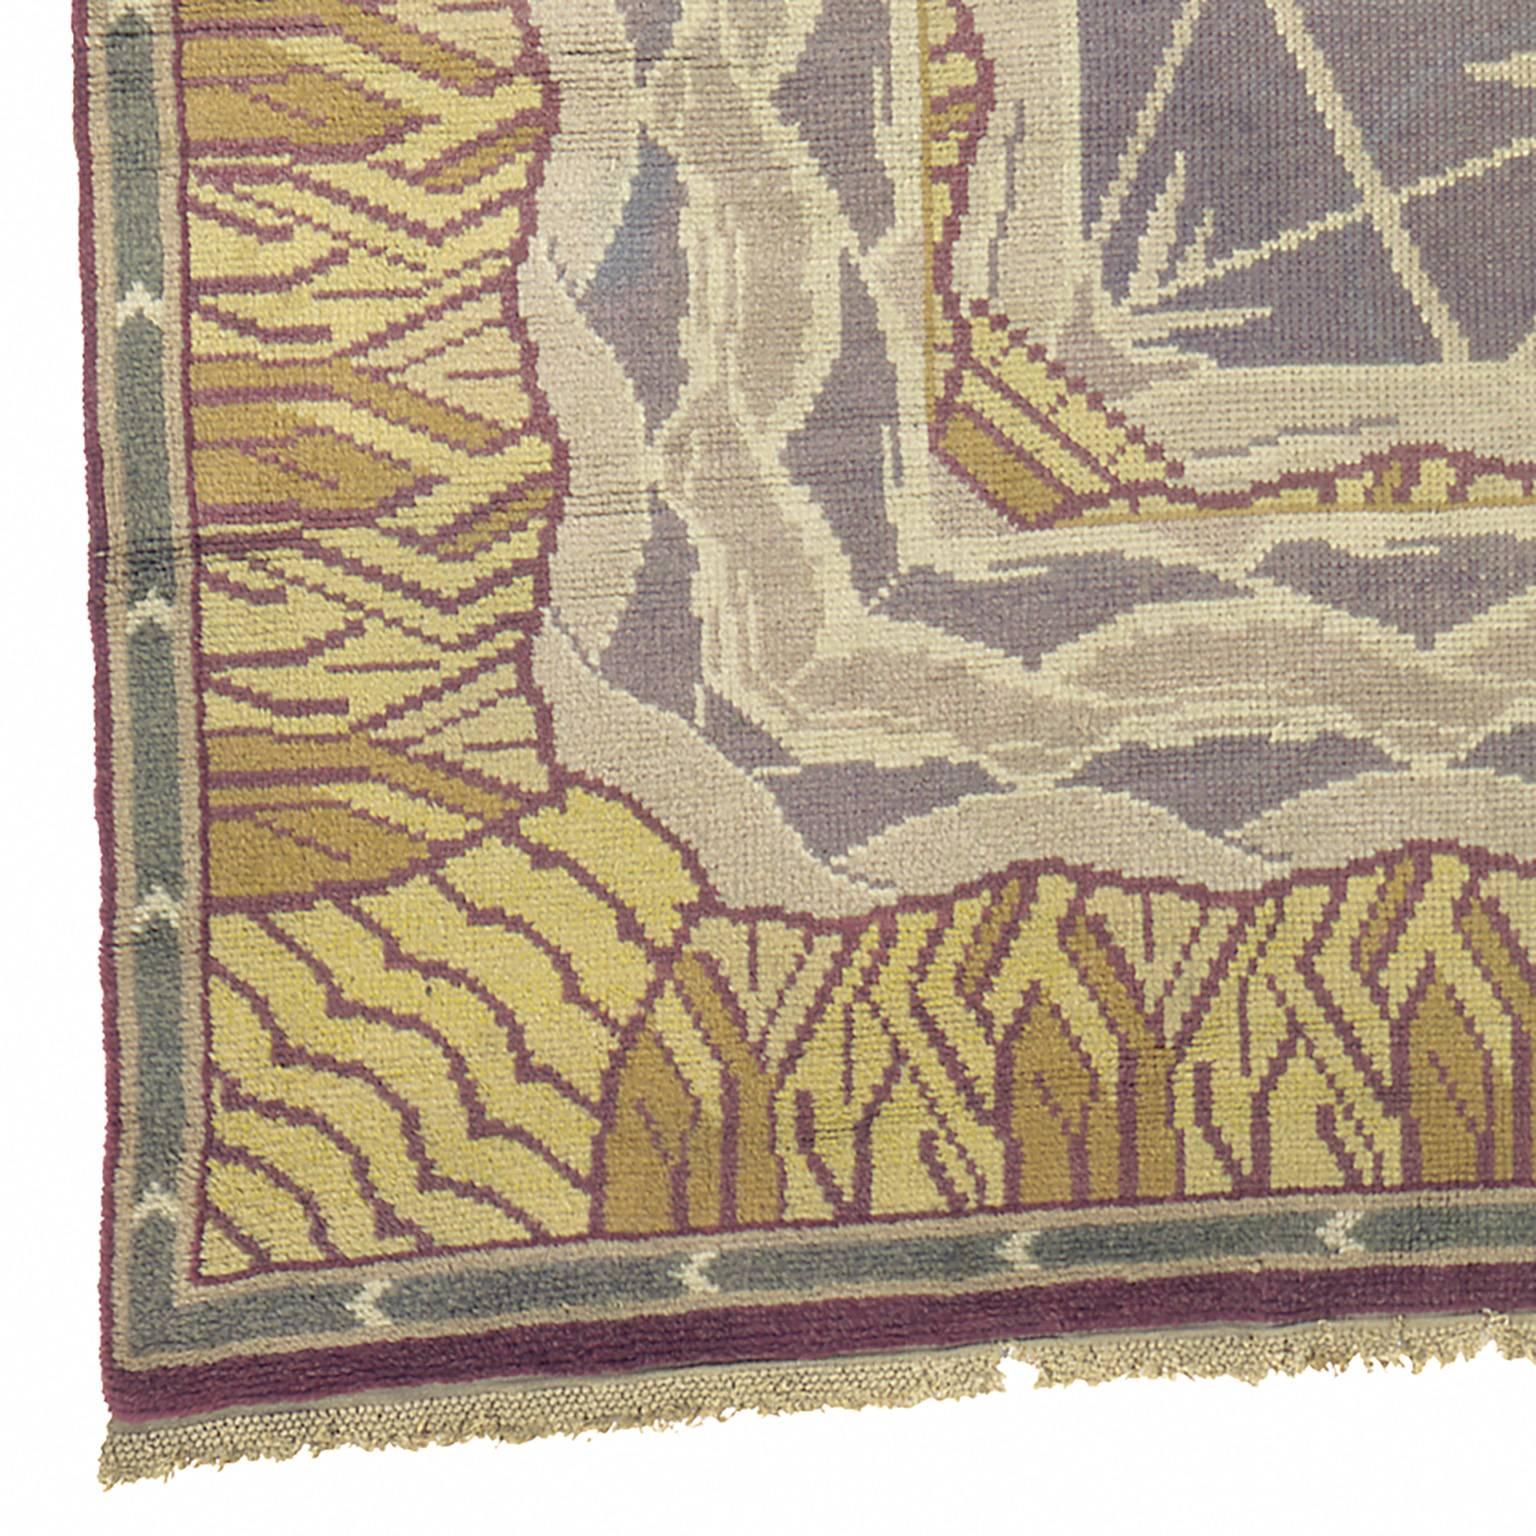 Vintage Swedish pile weave carpet
circa Sweden 1910
Initialed 